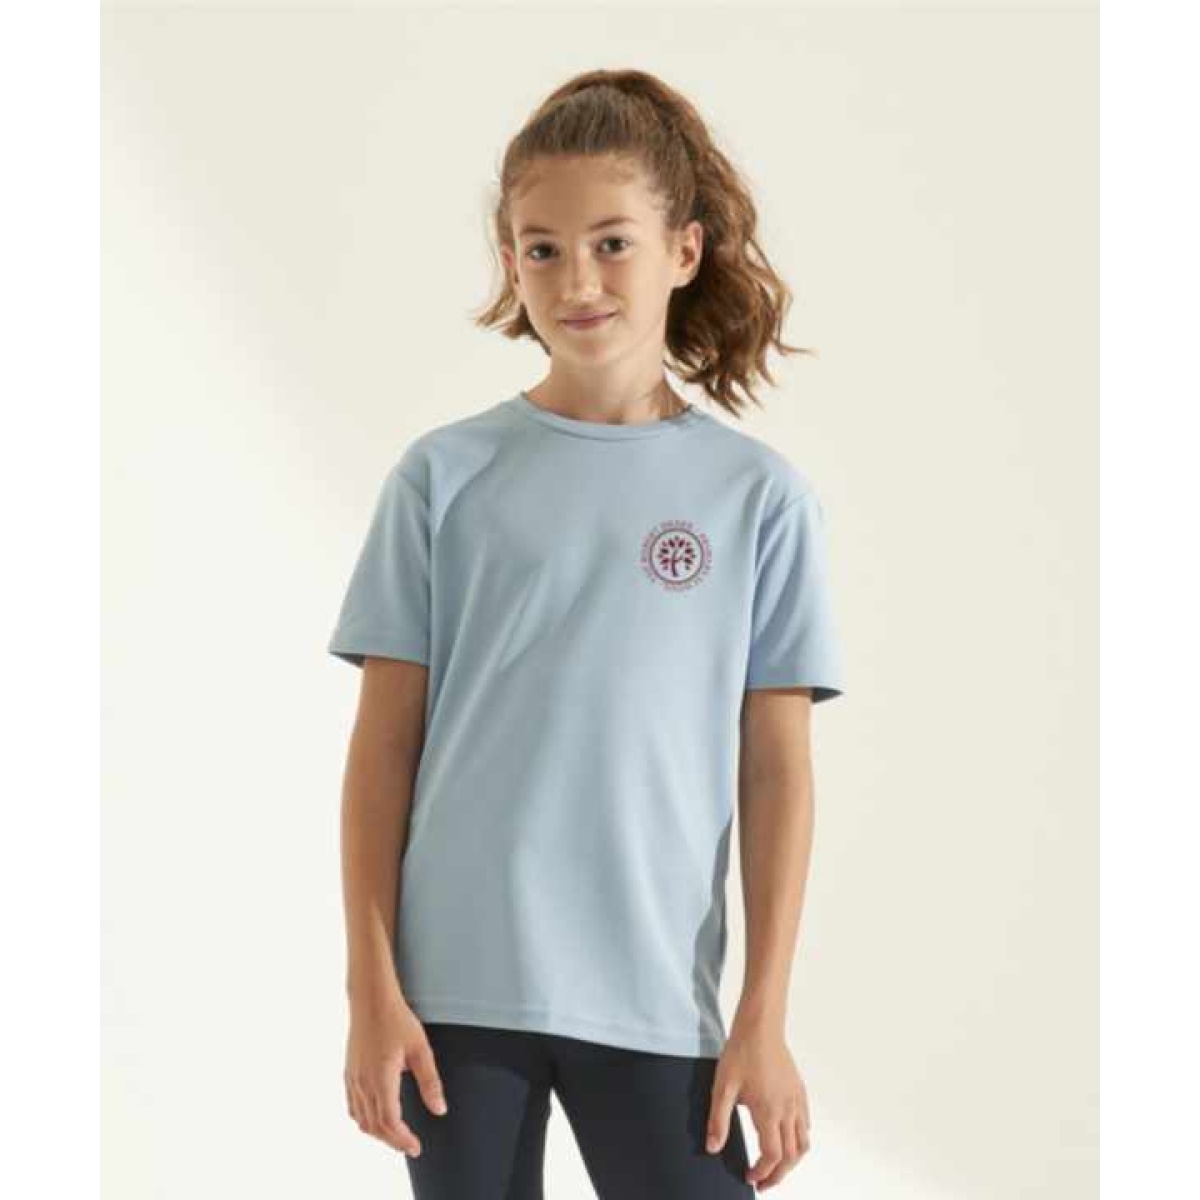 Robert Drake Primary - PE T-shirt, Robert Drake School